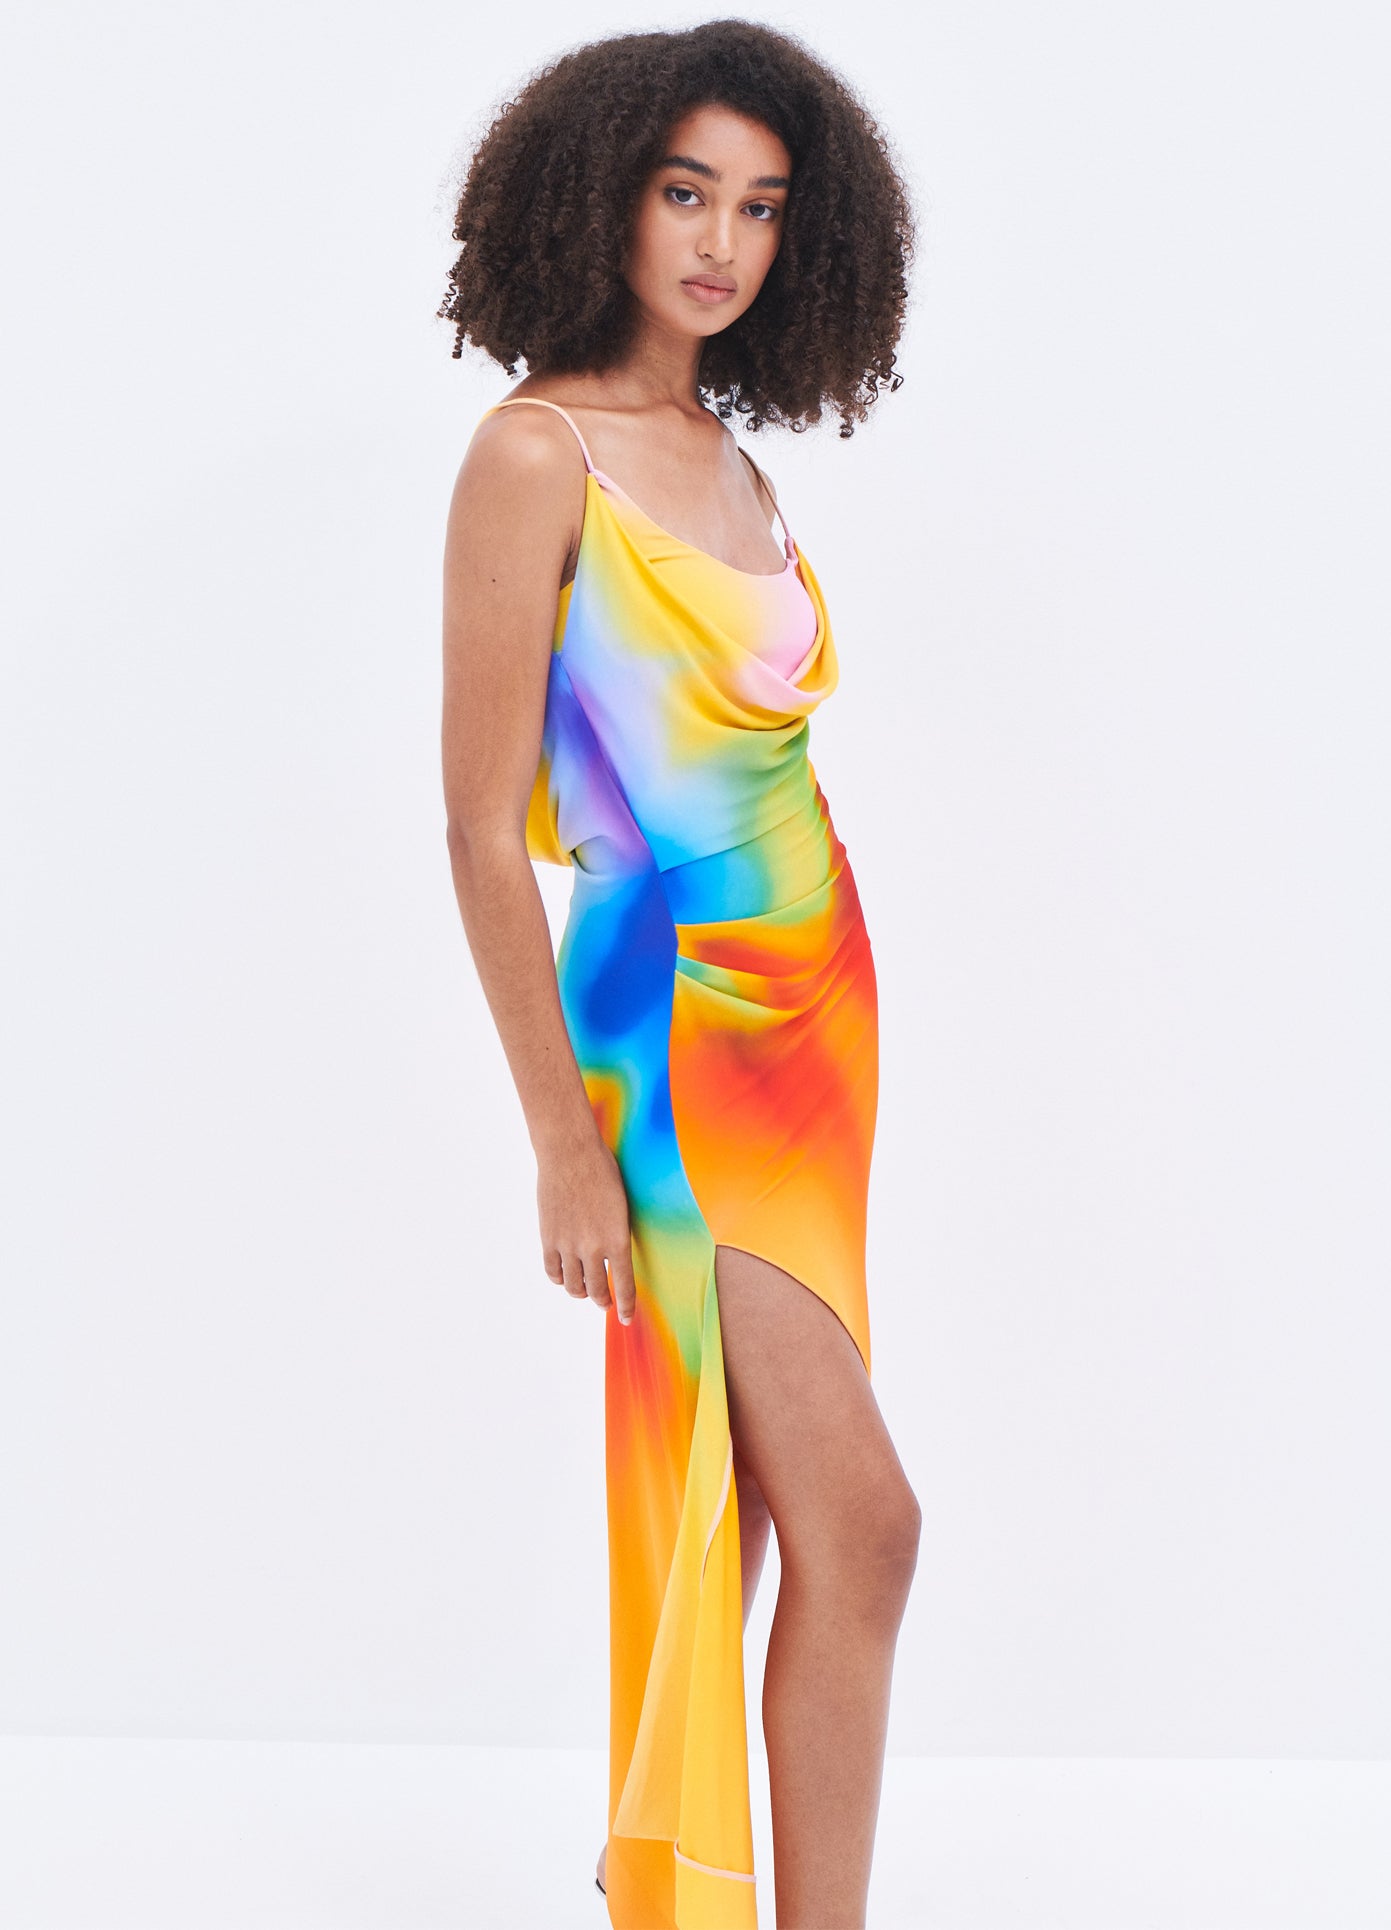 MONSE Rainbow Orchid Slip Dress in Multi Colors on model full side view